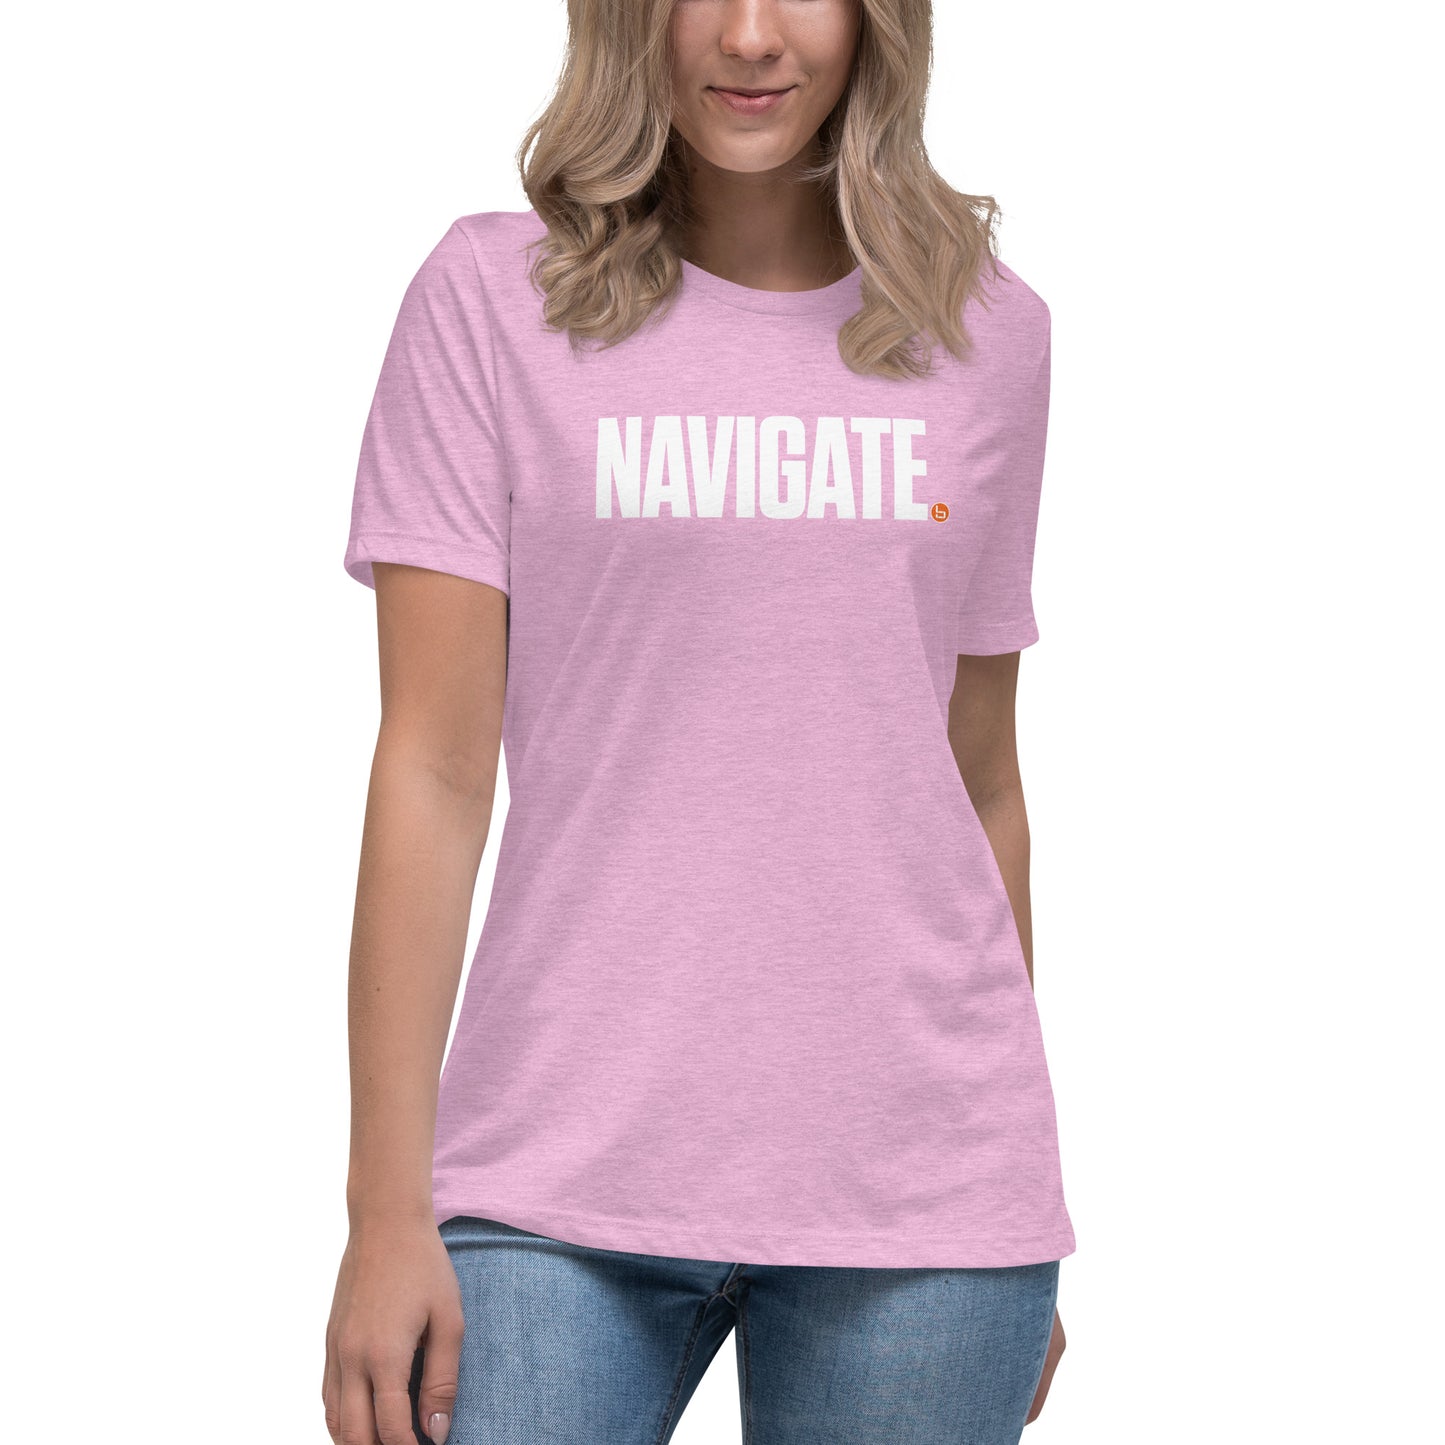 NAVIGATE - Women's Relaxed T-Shirt - White Logo